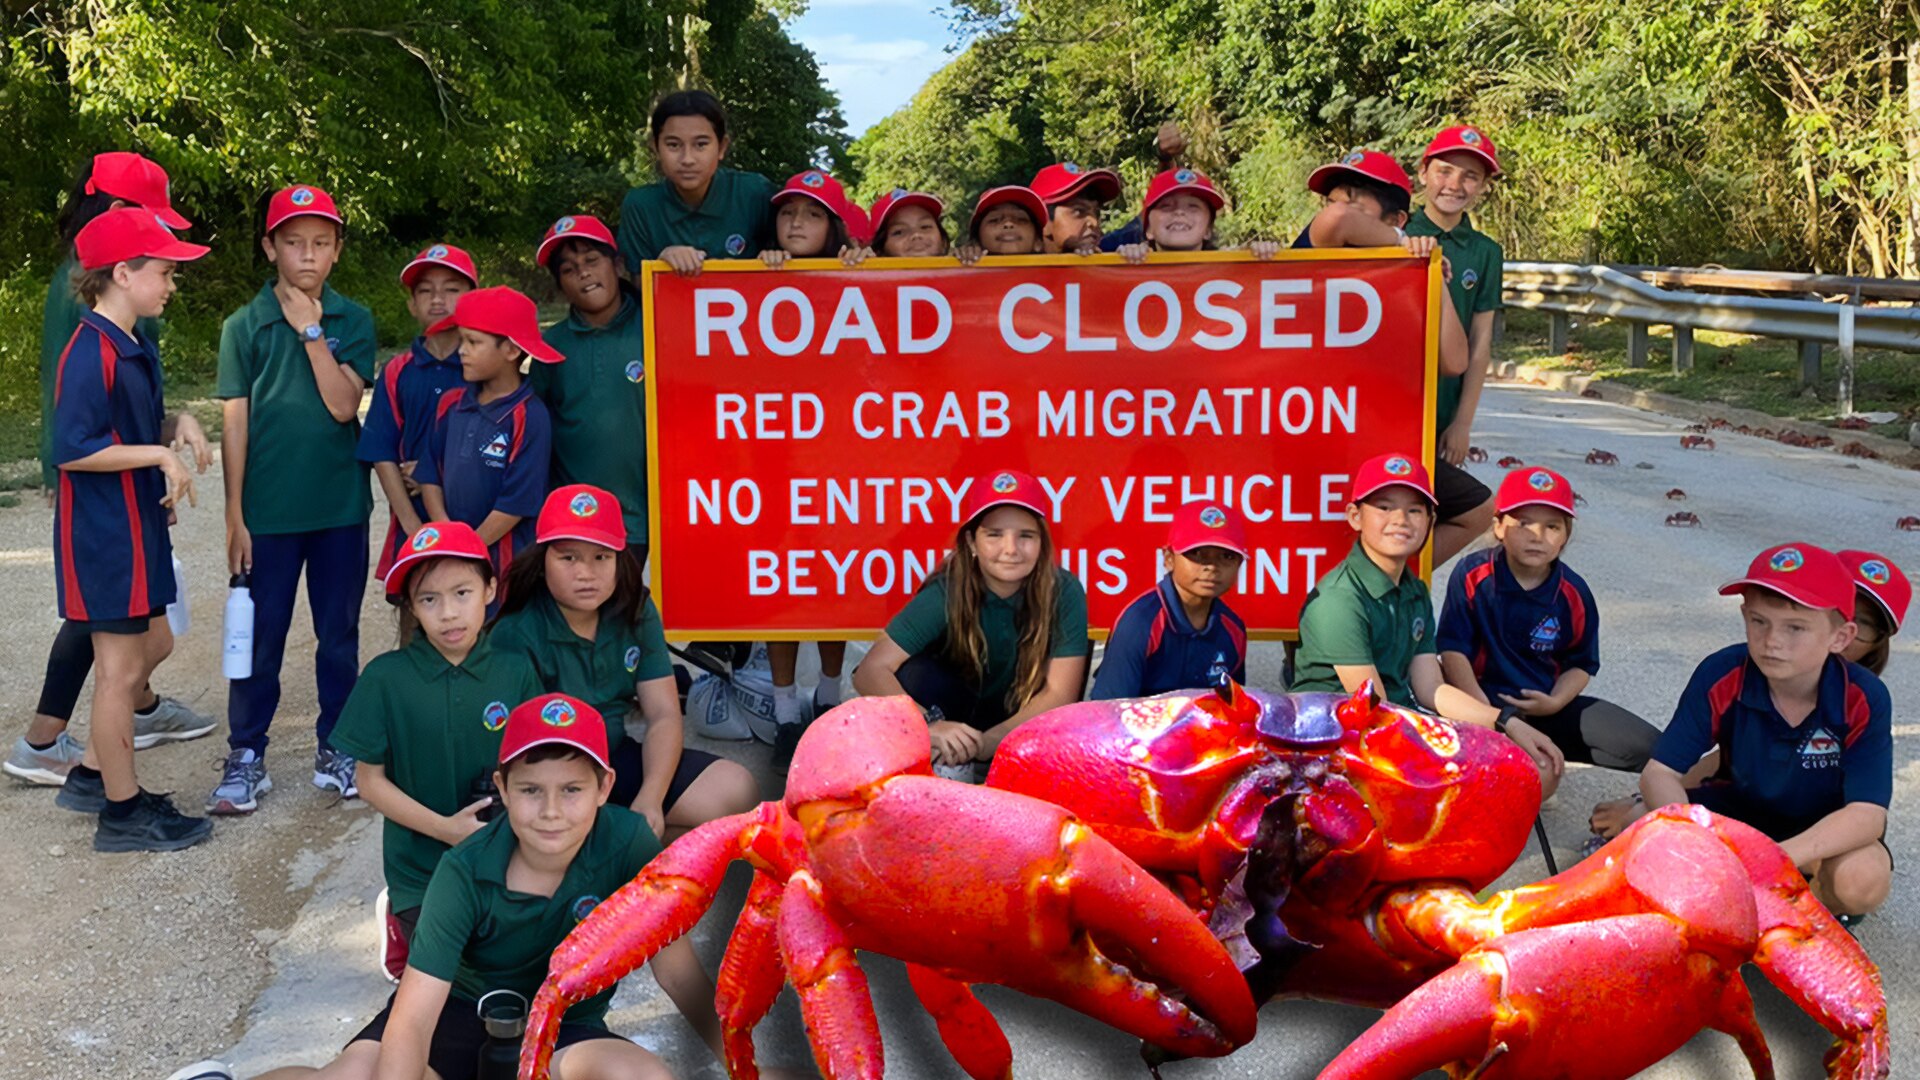 Christmas Island Crabs - Behind The News